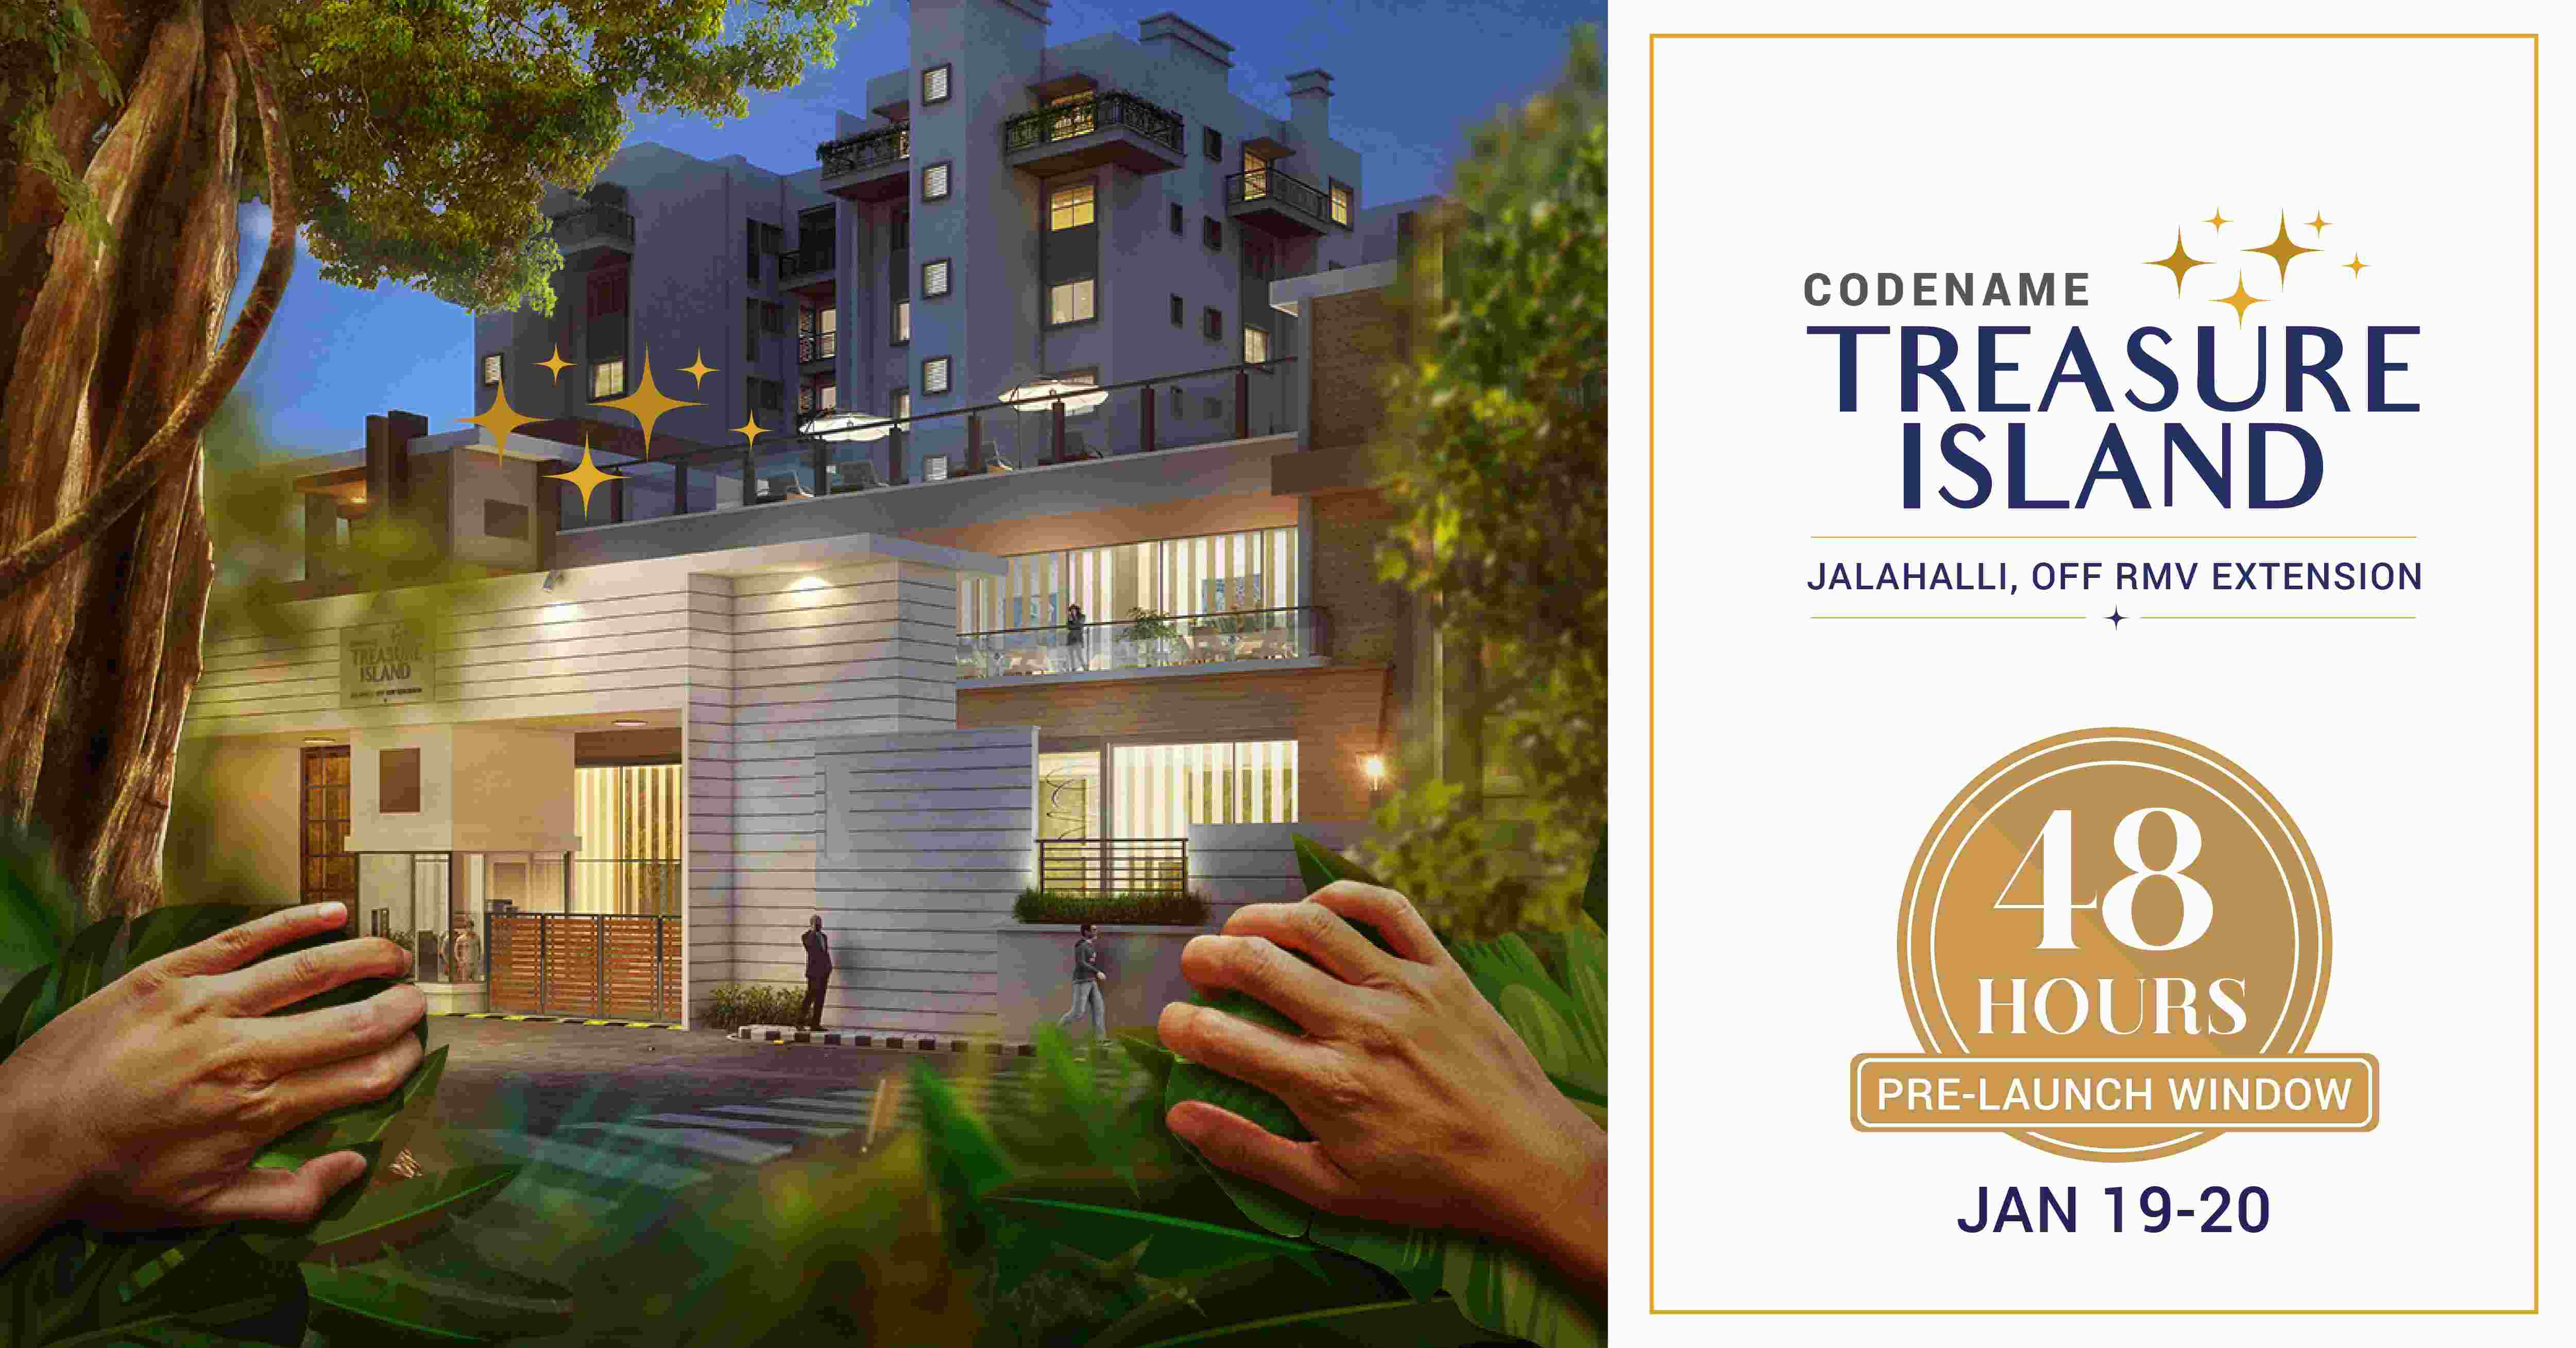 Grab 48 hour pre-launch opportunity at Shriram Codename Treasure Island in Bangalore